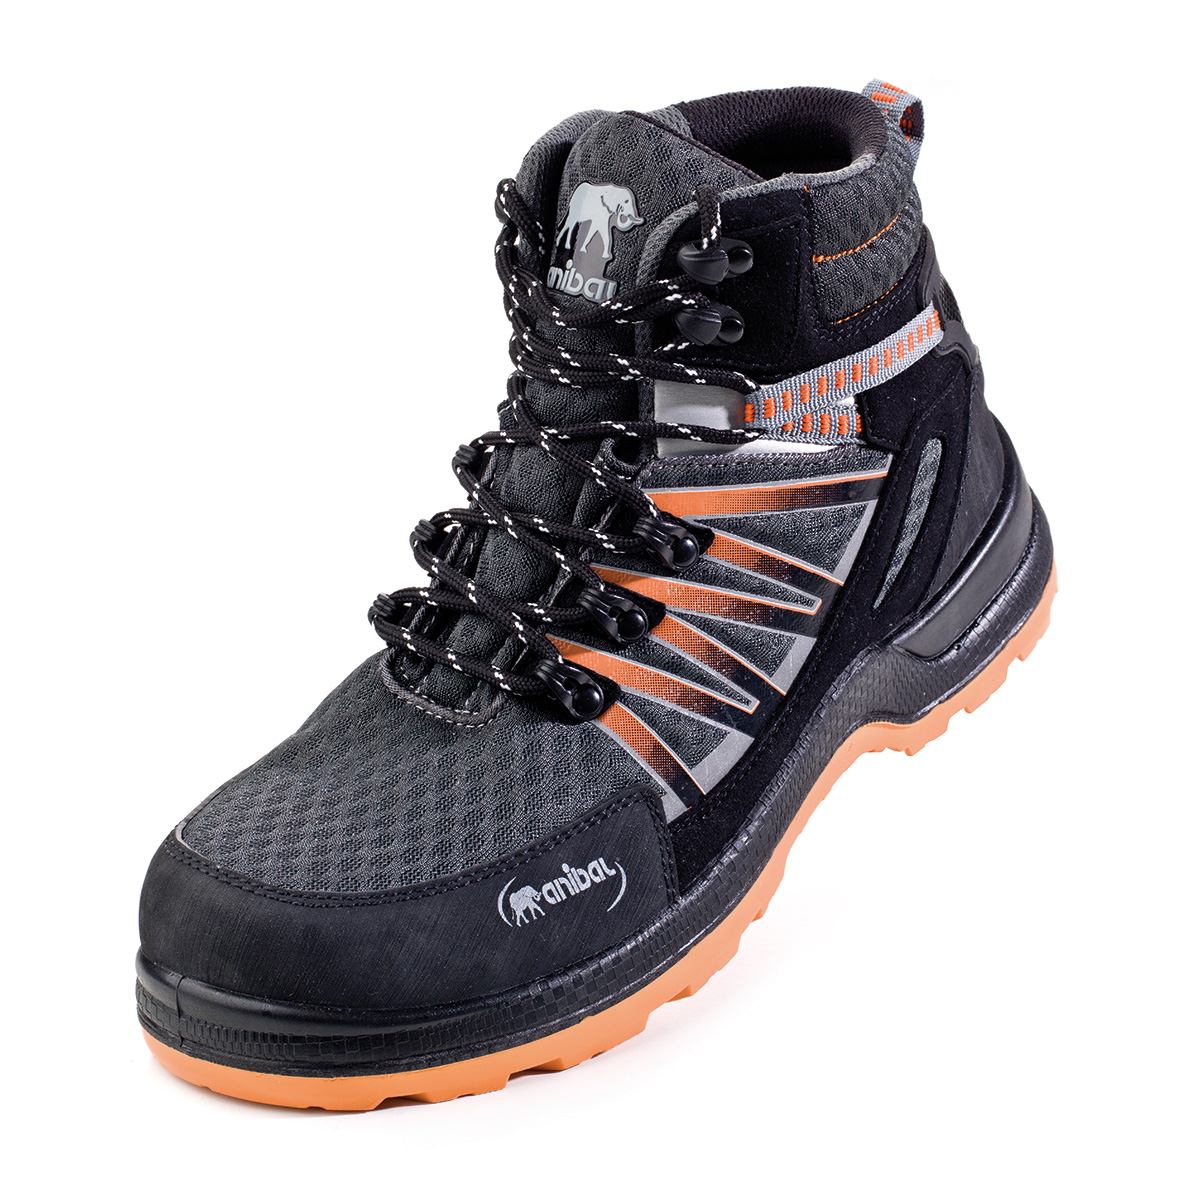 1688-BTT Safety Footwear Trekking Mod. “TROYA”
Trekking boot of suede leather in S1P. Dual density polyurethane SRC sole.